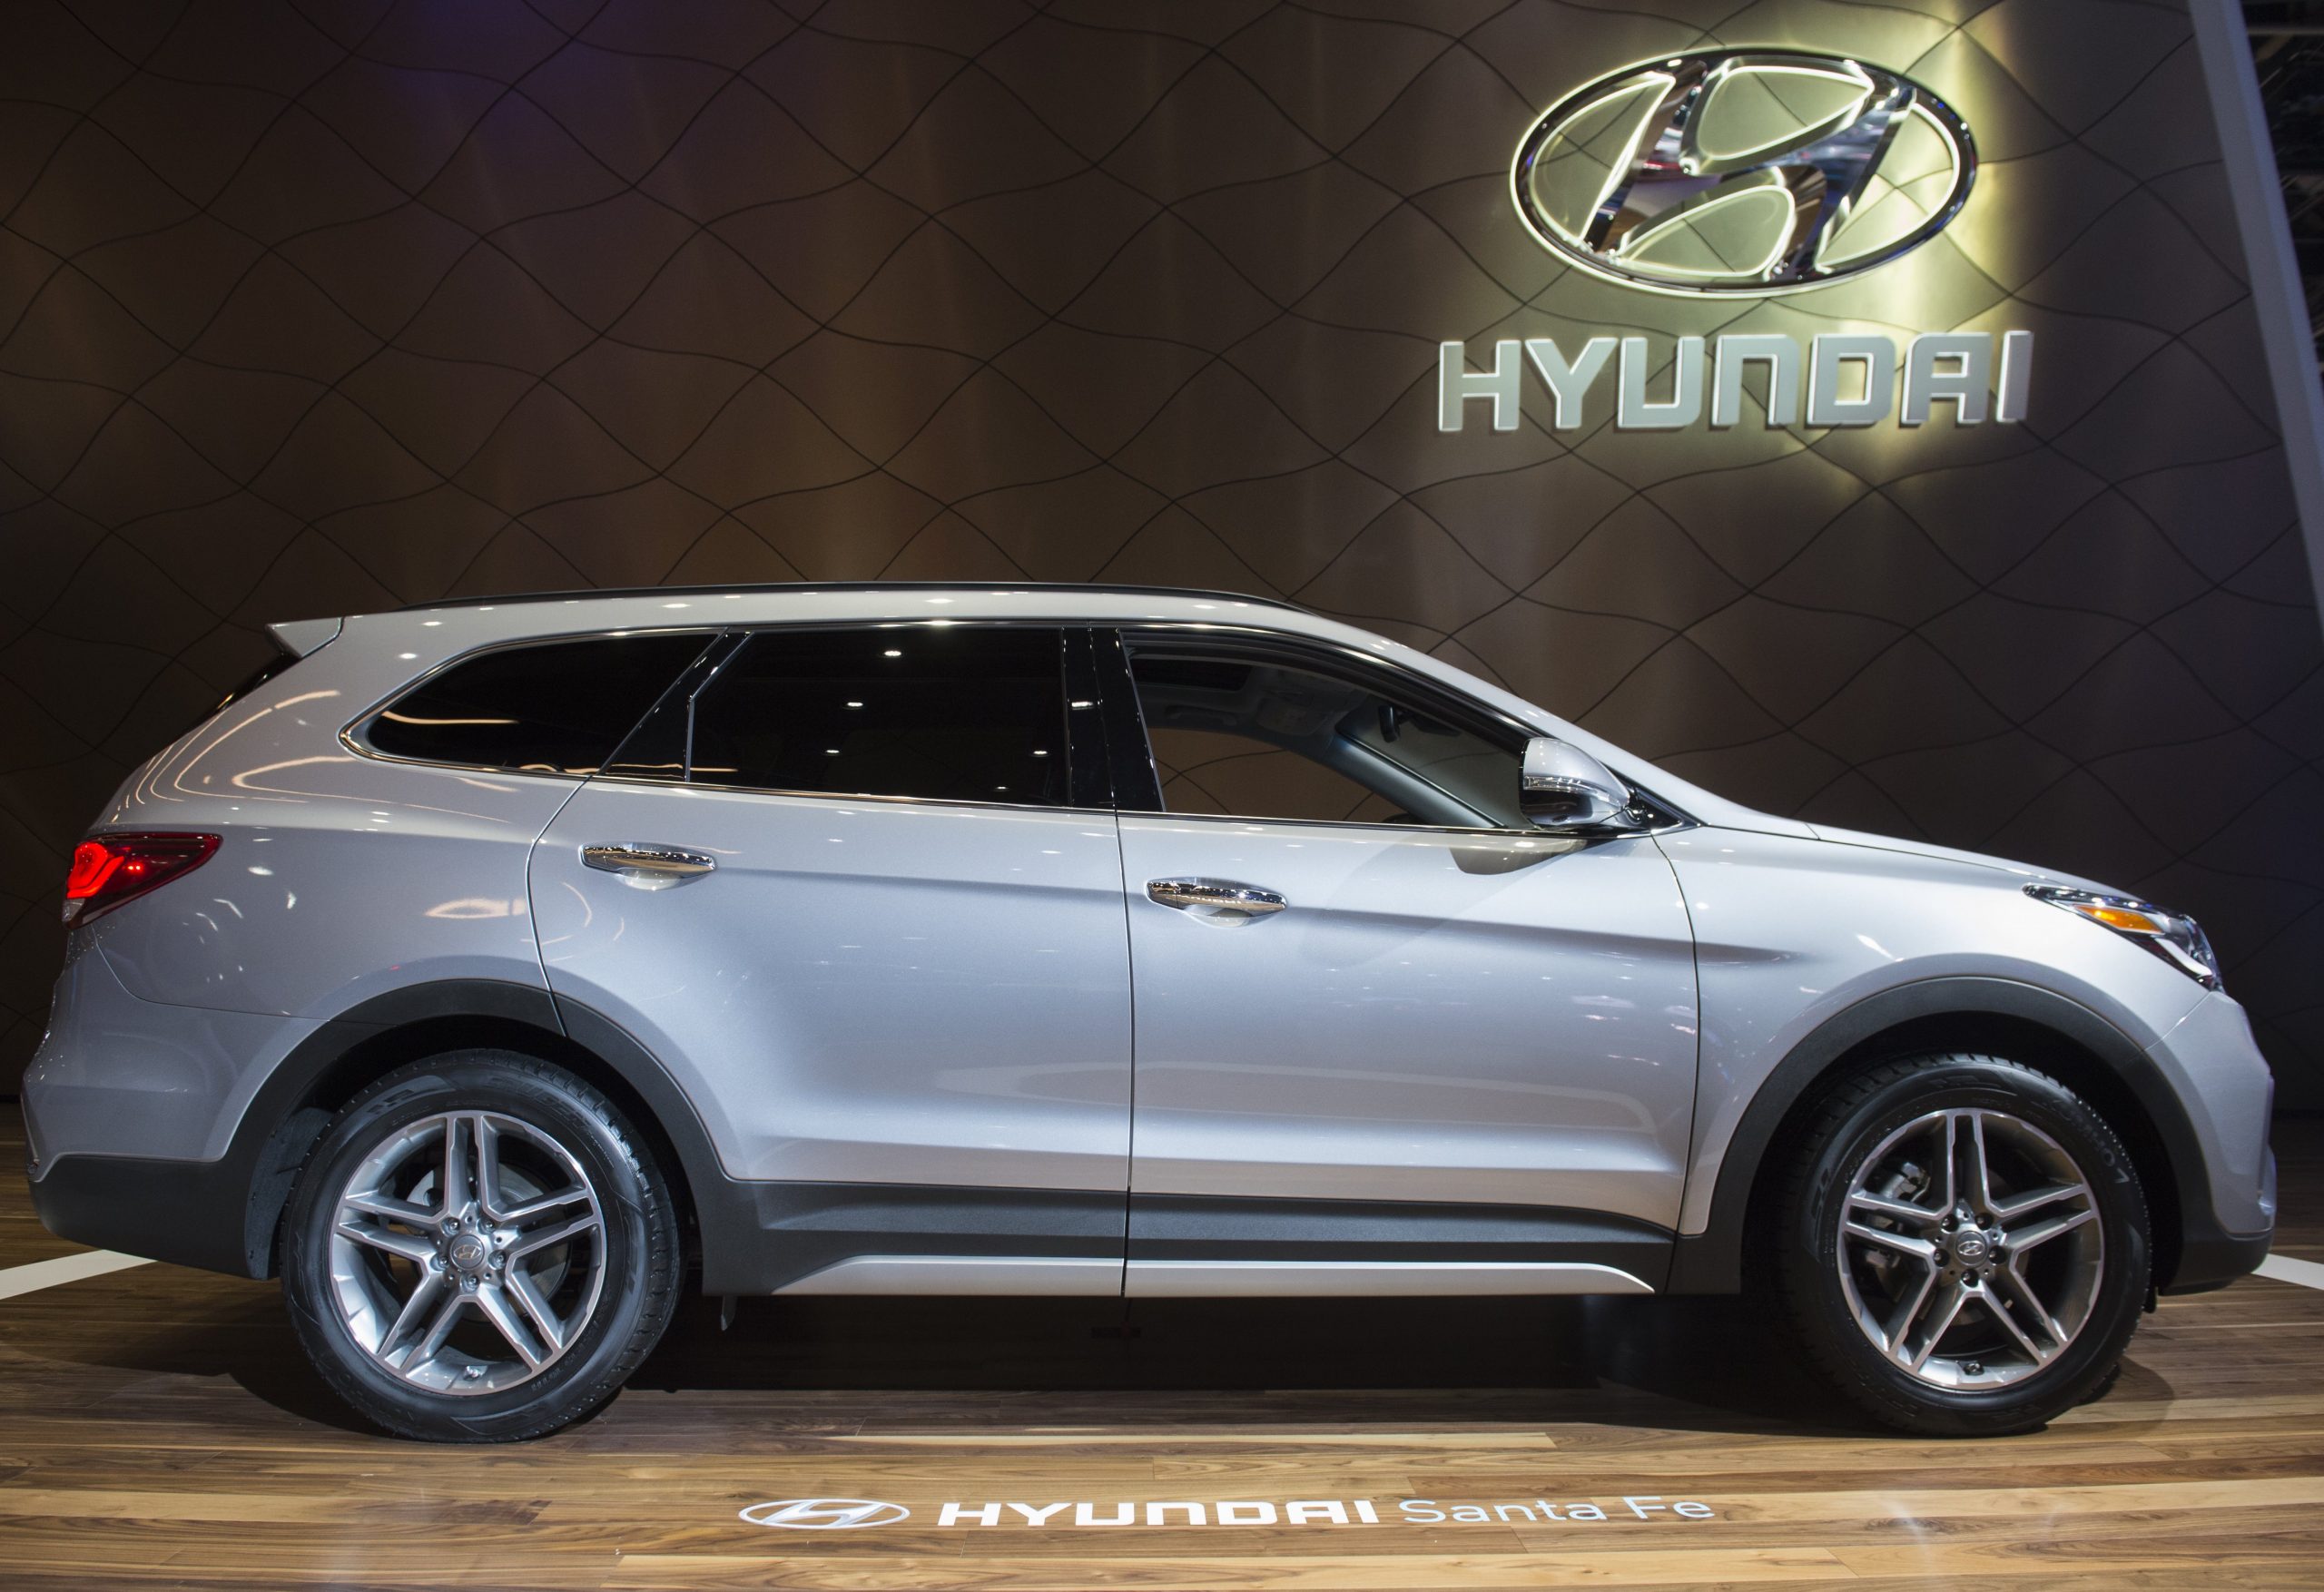 A silver 2017 Hyundai Santa Fe on display at the North American International Auto Show in Detroit, Michigan